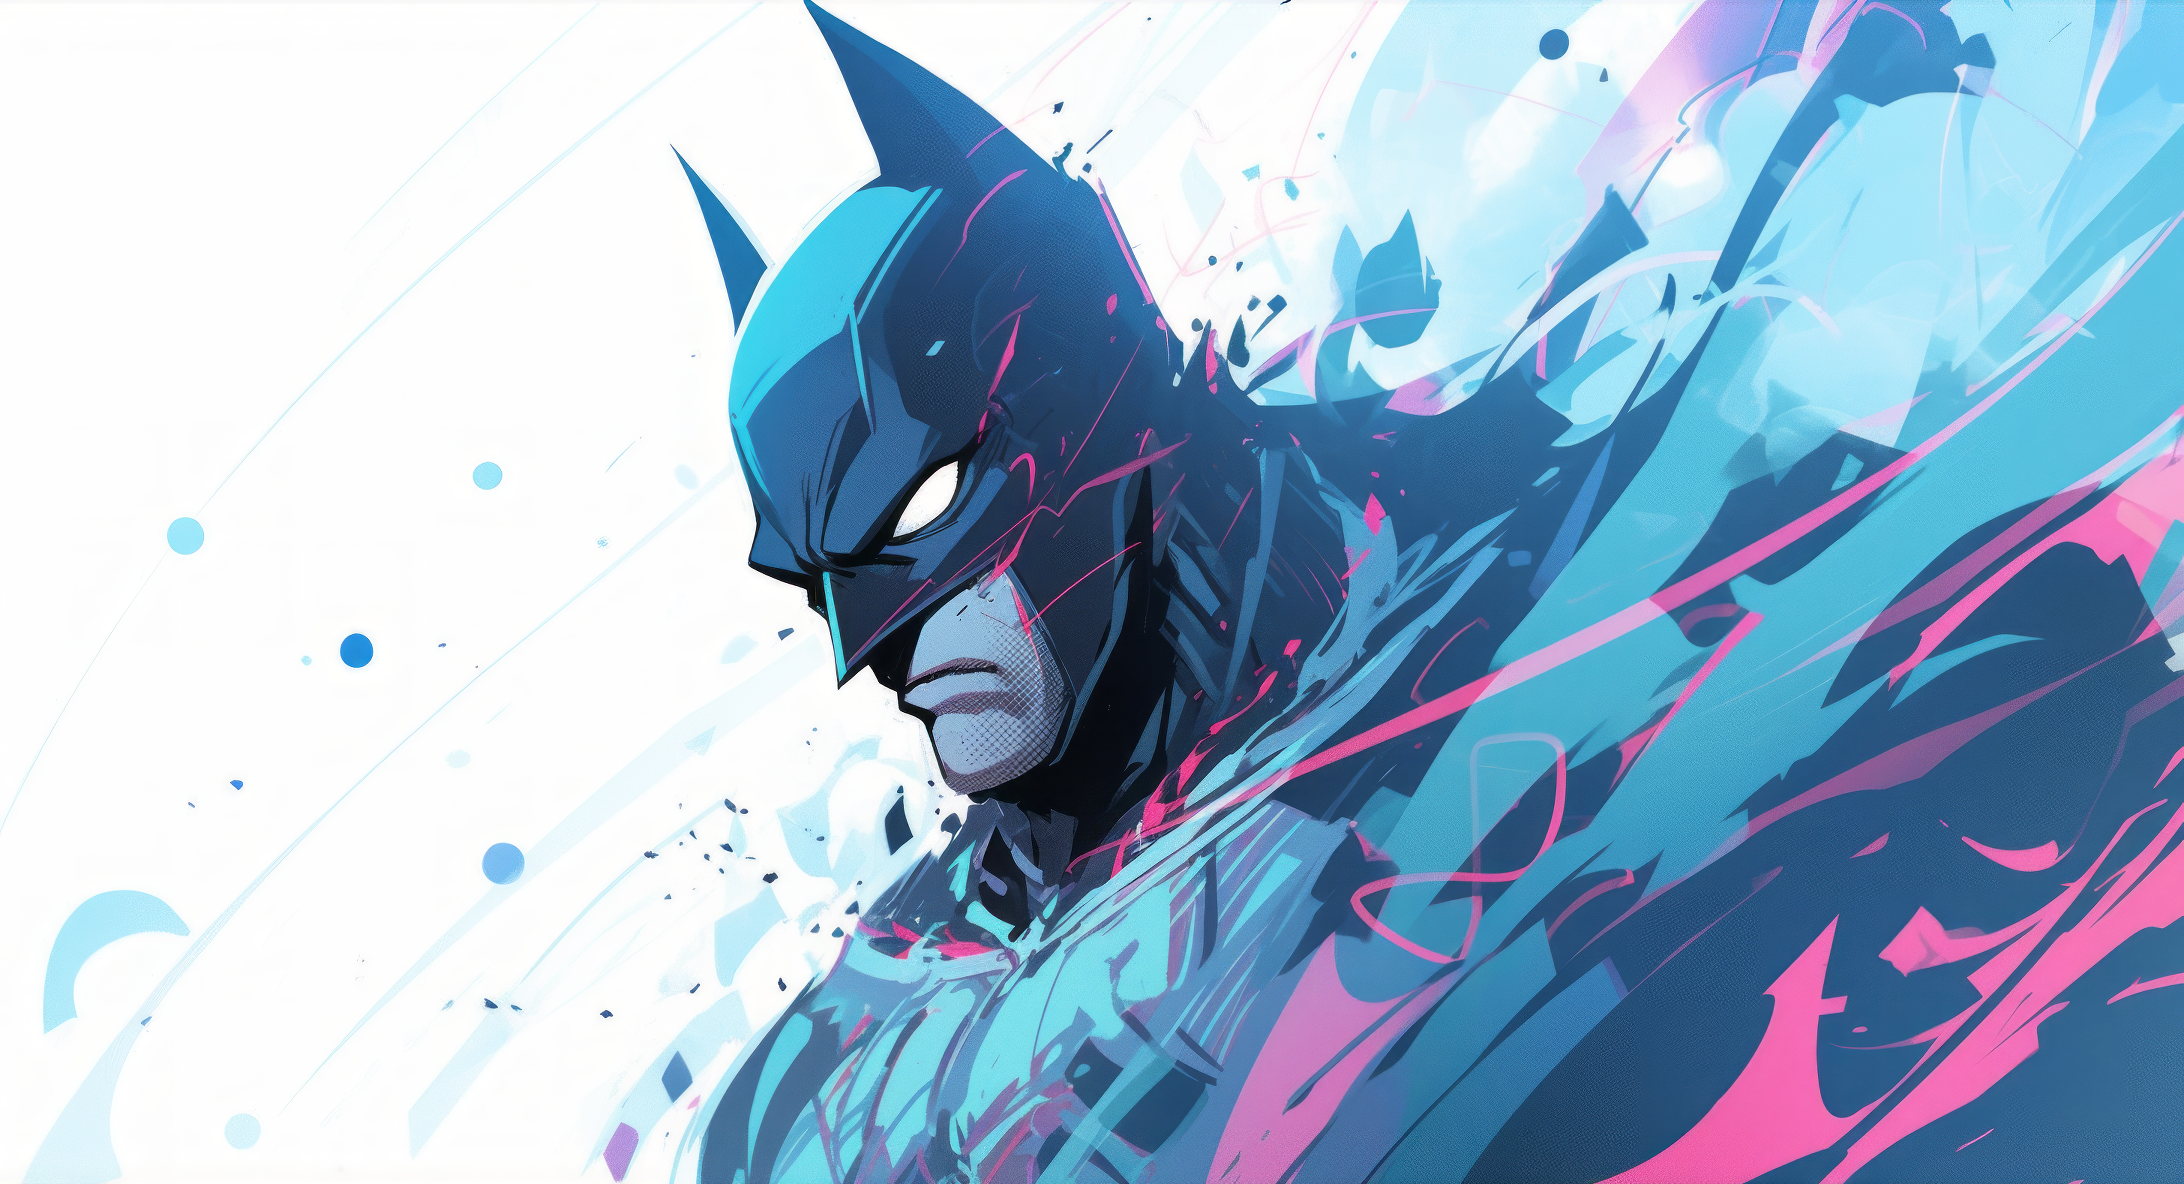 DC Comics Superhero HD Batman Wallpapers, HD Wallpapers